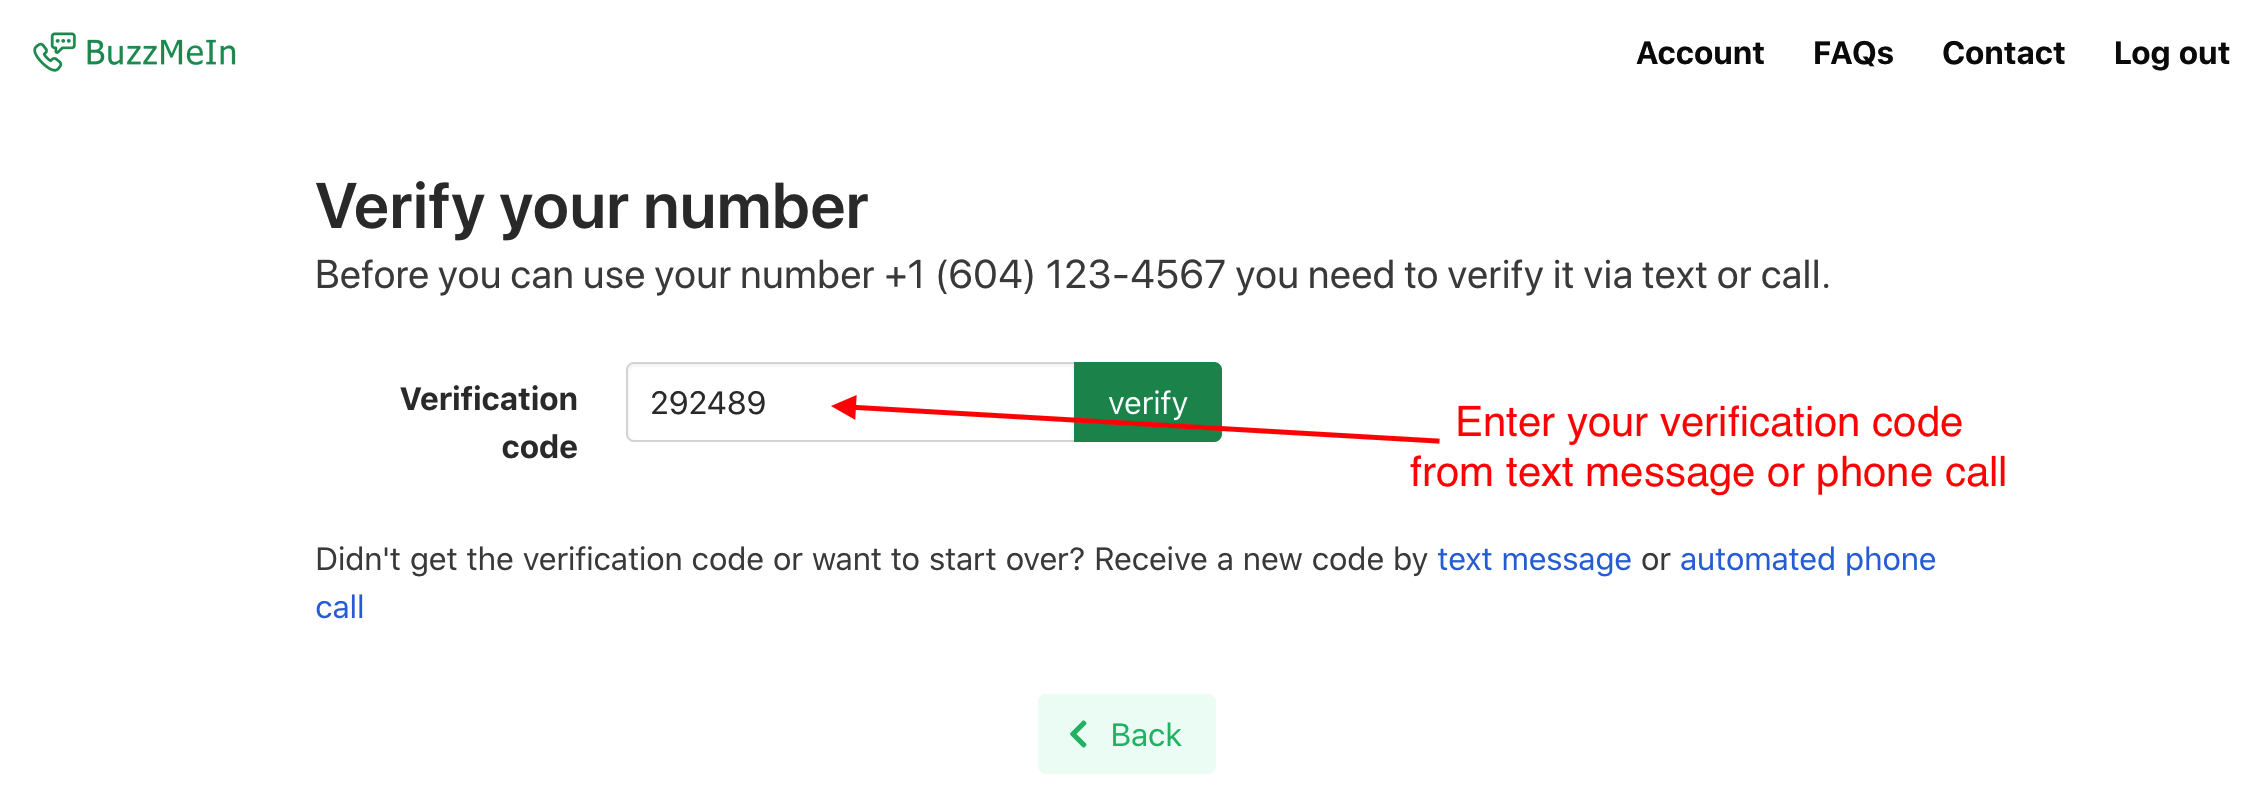 Enter your verification code